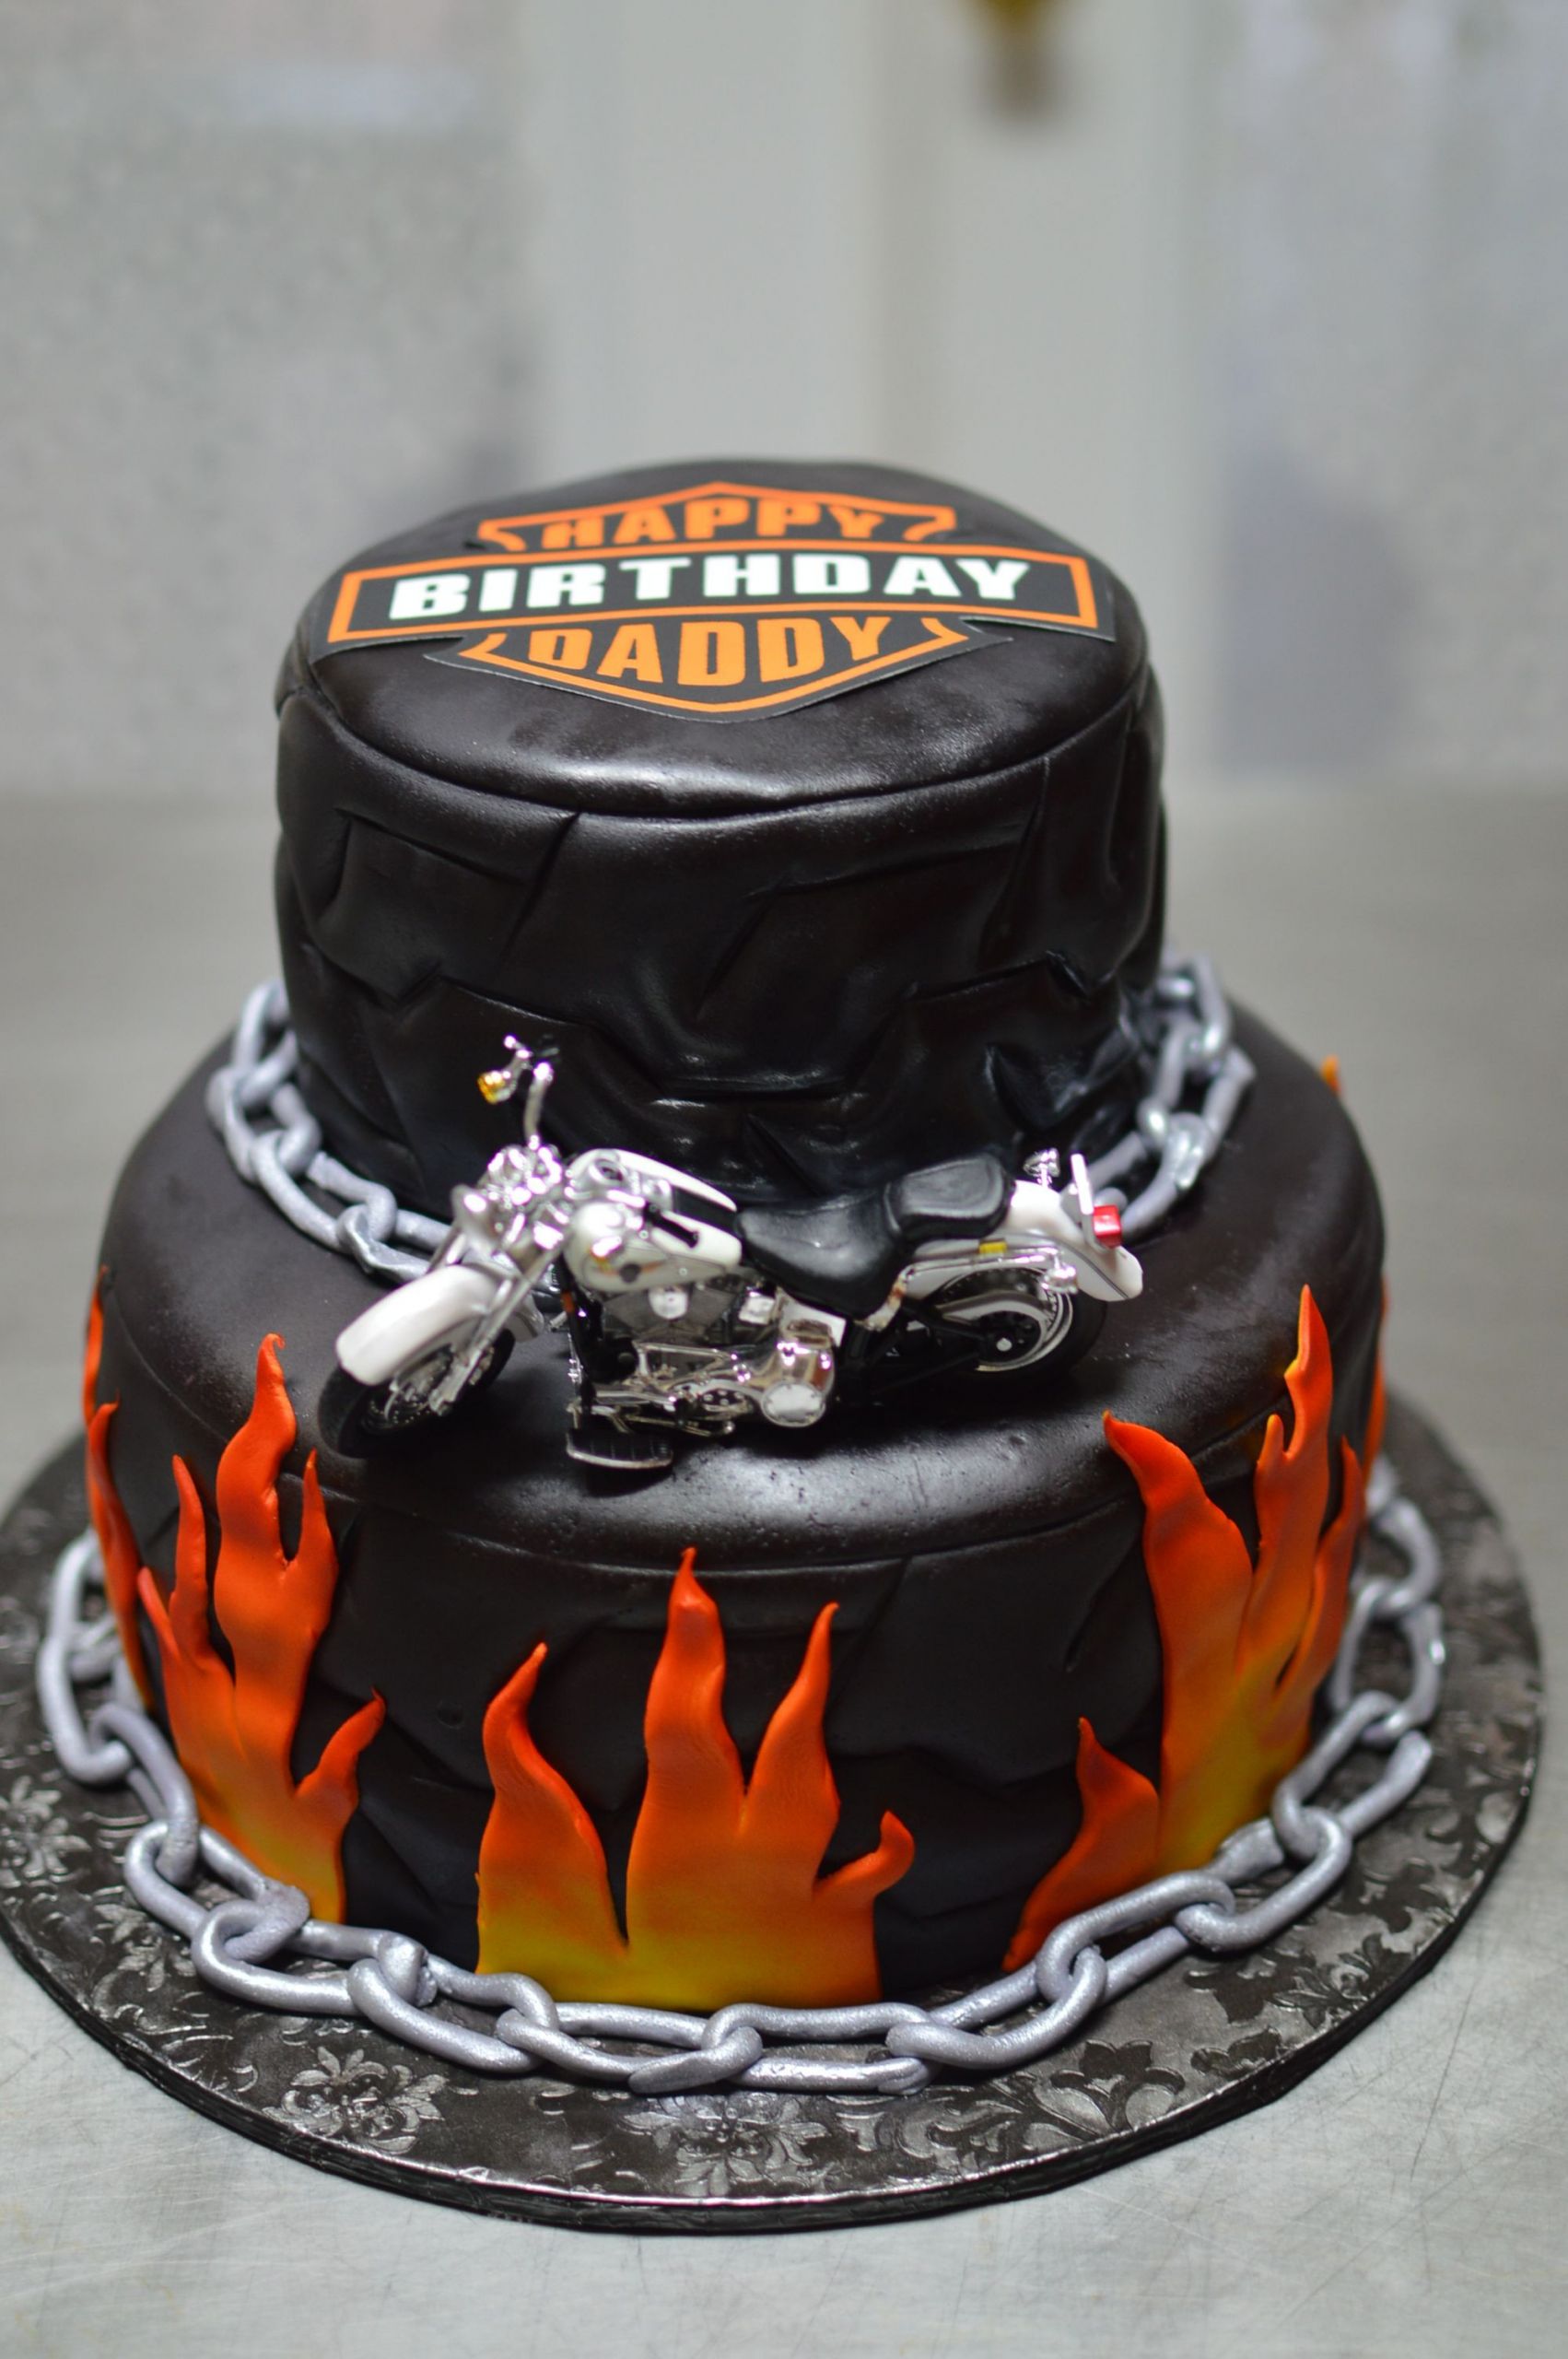 Harley Davidson Birthday Cake
 Harley Davidson Cake cakes